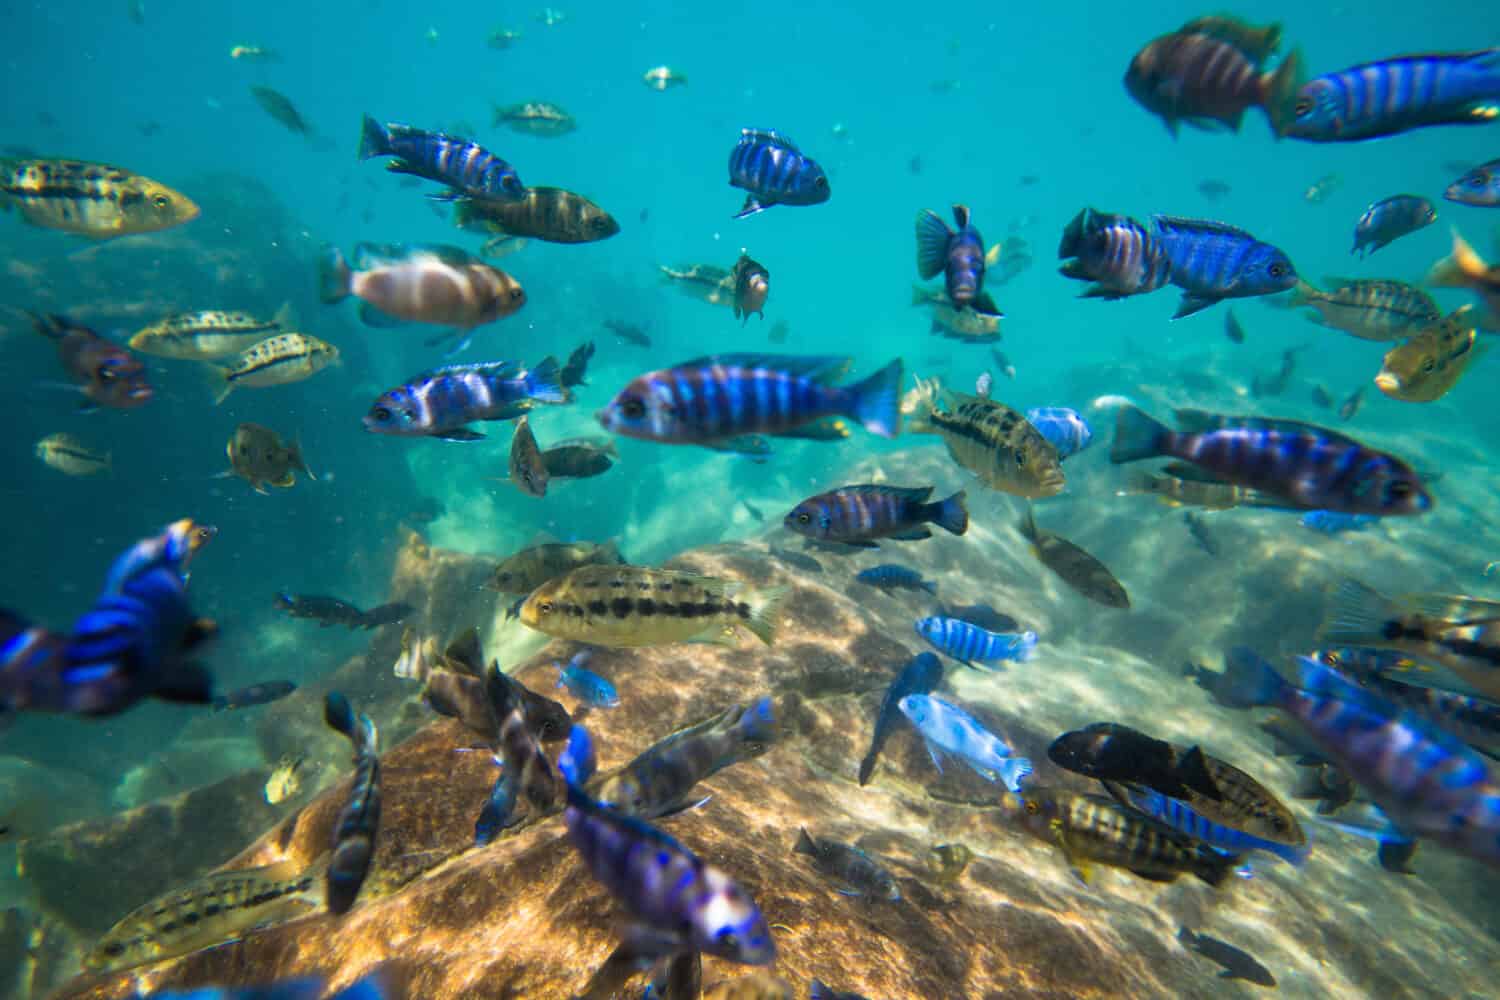 Underwater world of Lake Malawi - Malawi